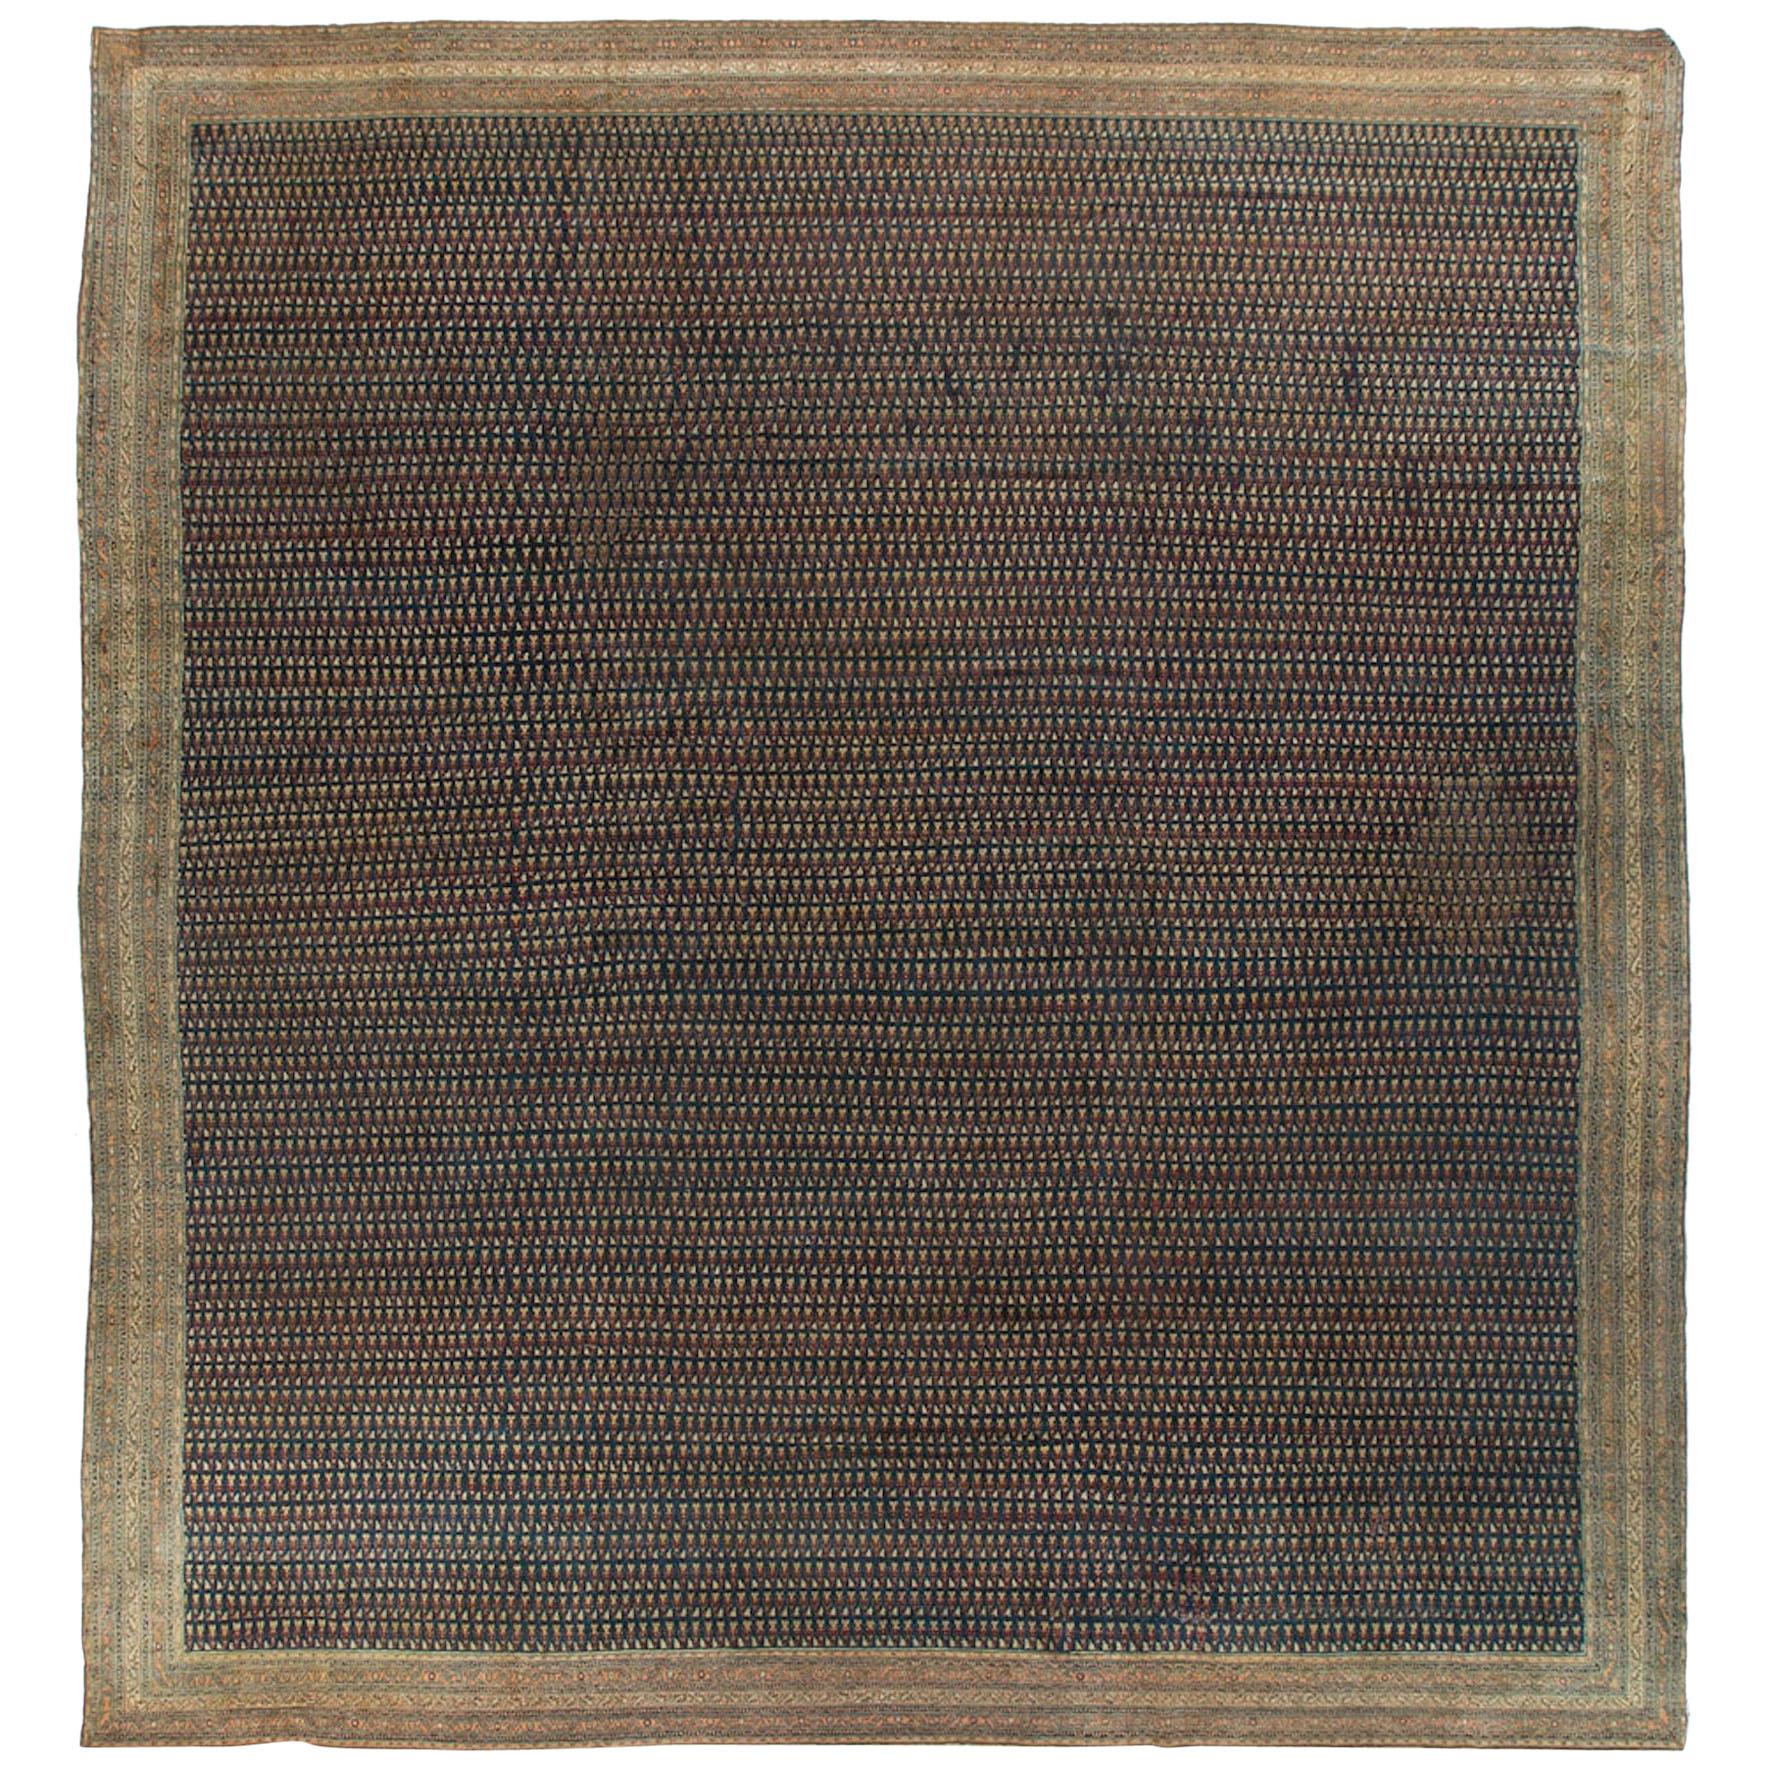 Antique Persian Seraband Rug, circa 1880 15'9" x 17'3".